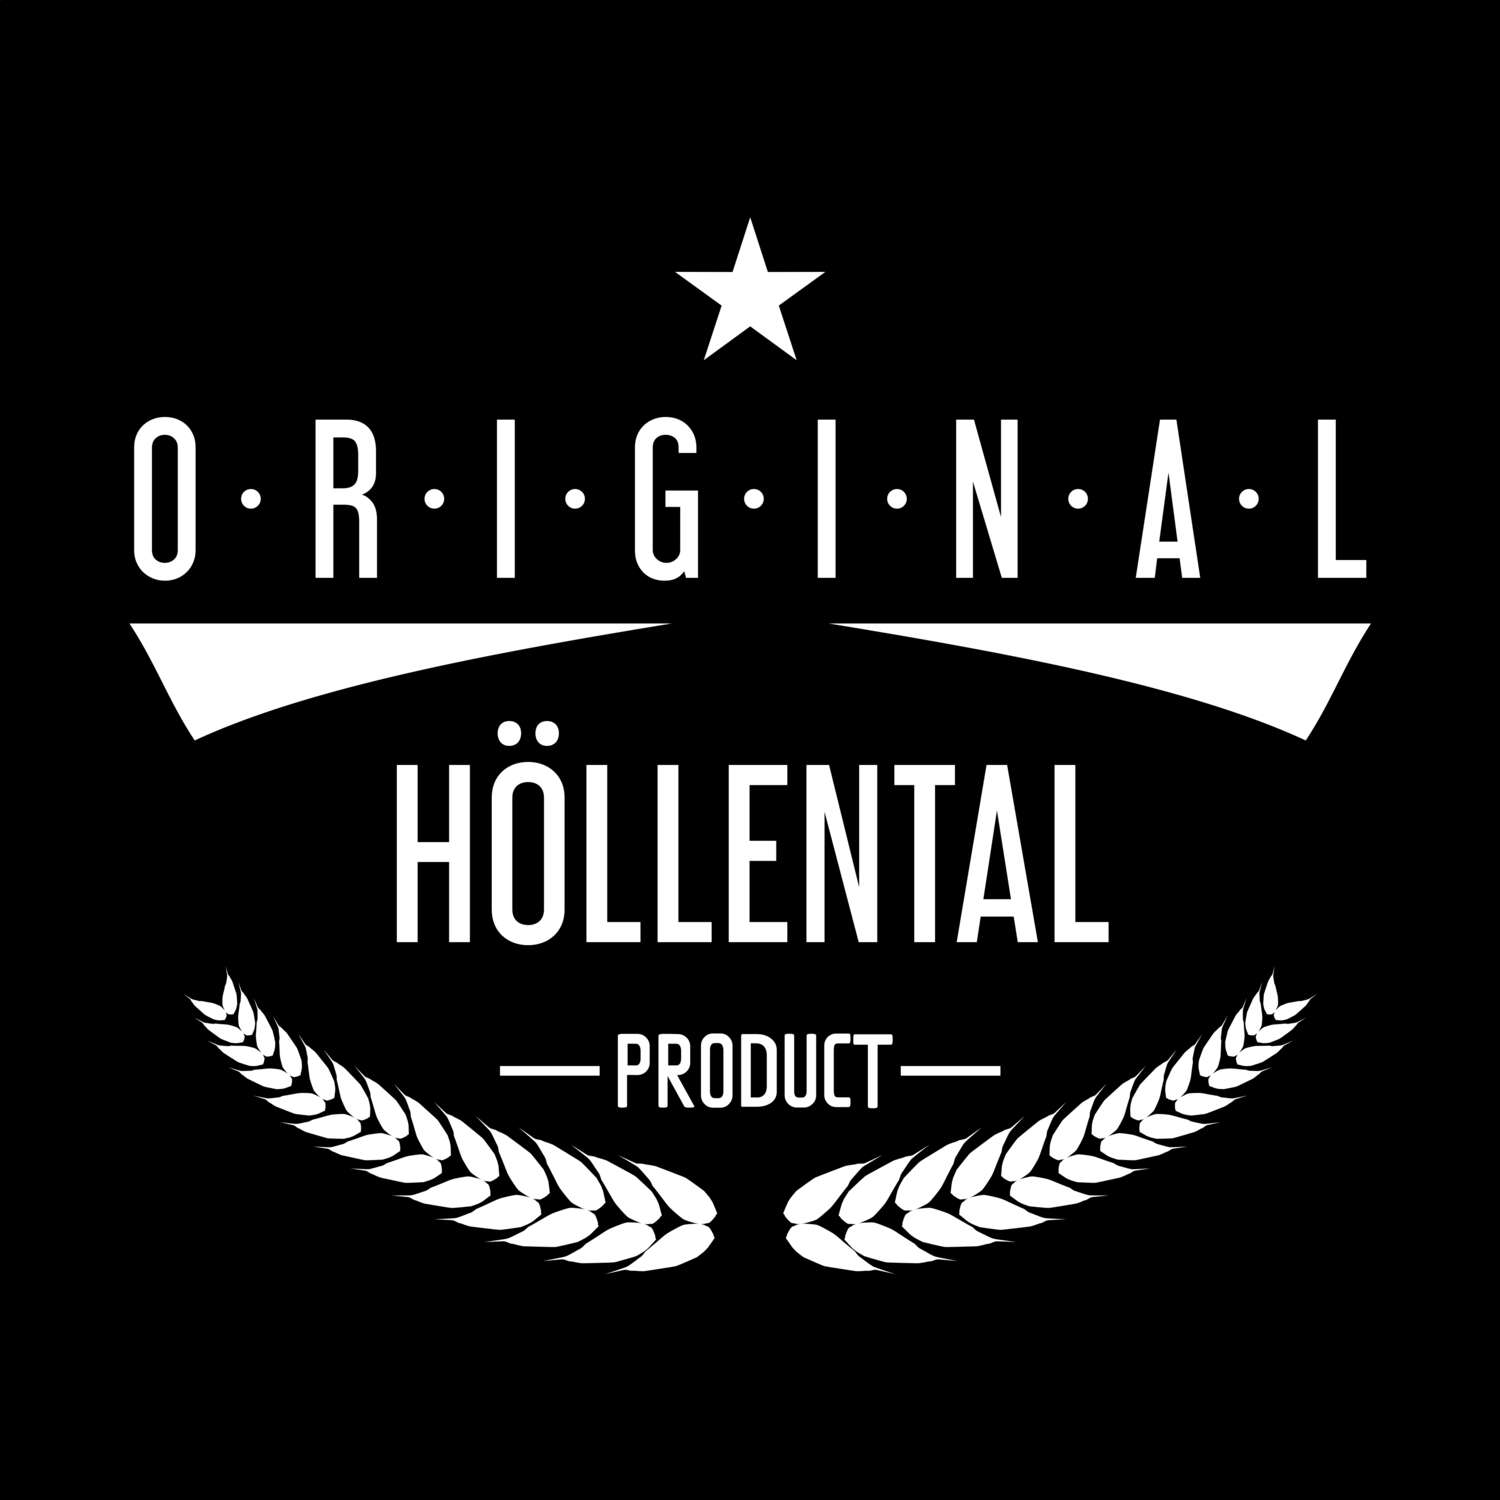 Höllental T-Shirt »Original Product«